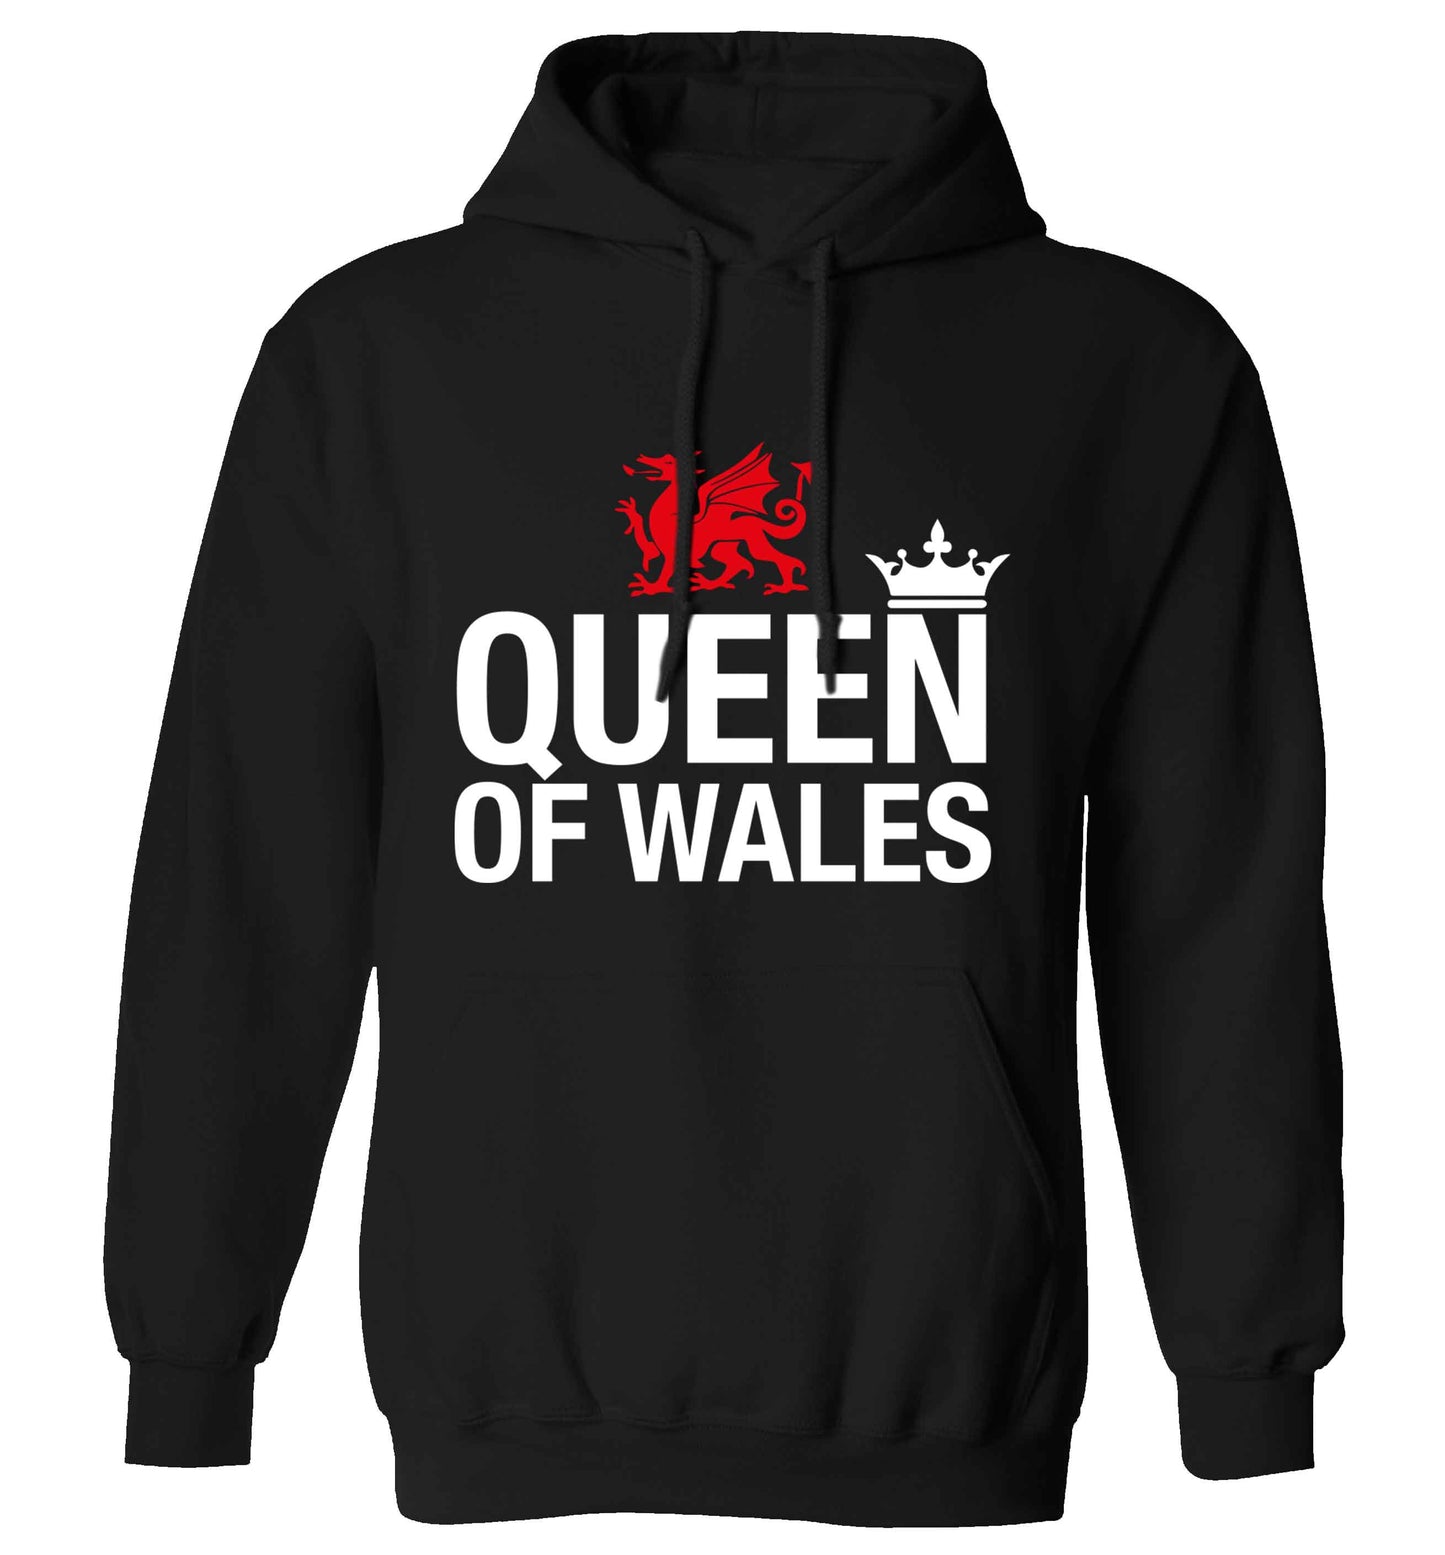 Queen of Wales adults unisex black hoodie 2XL